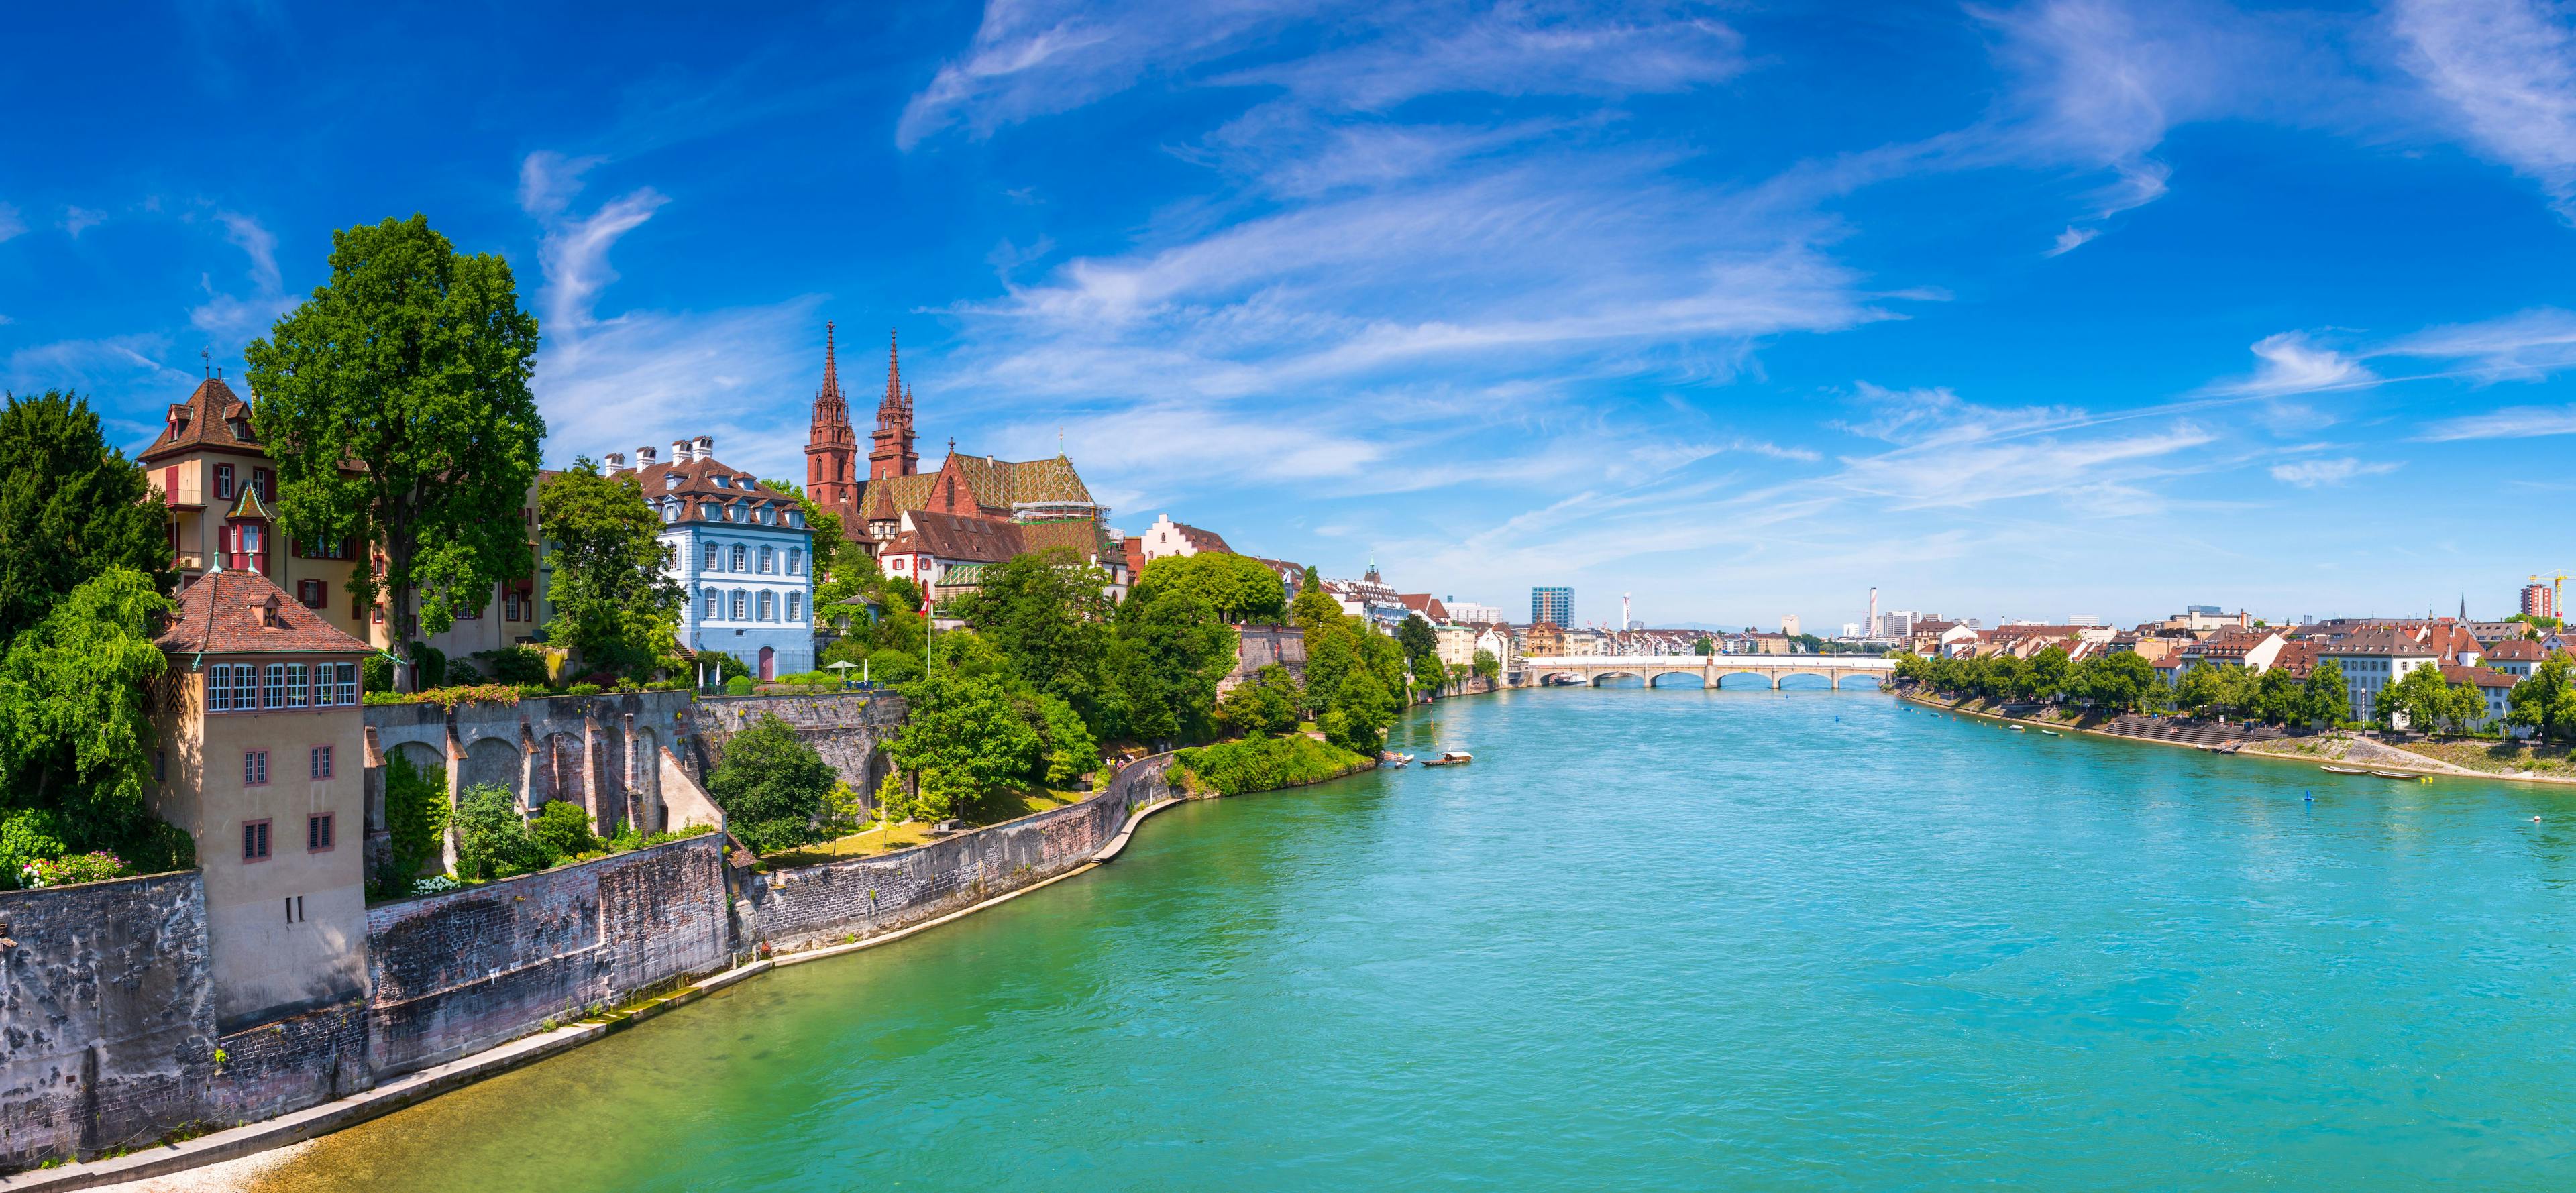 the cityscape of Basel, Switzerland